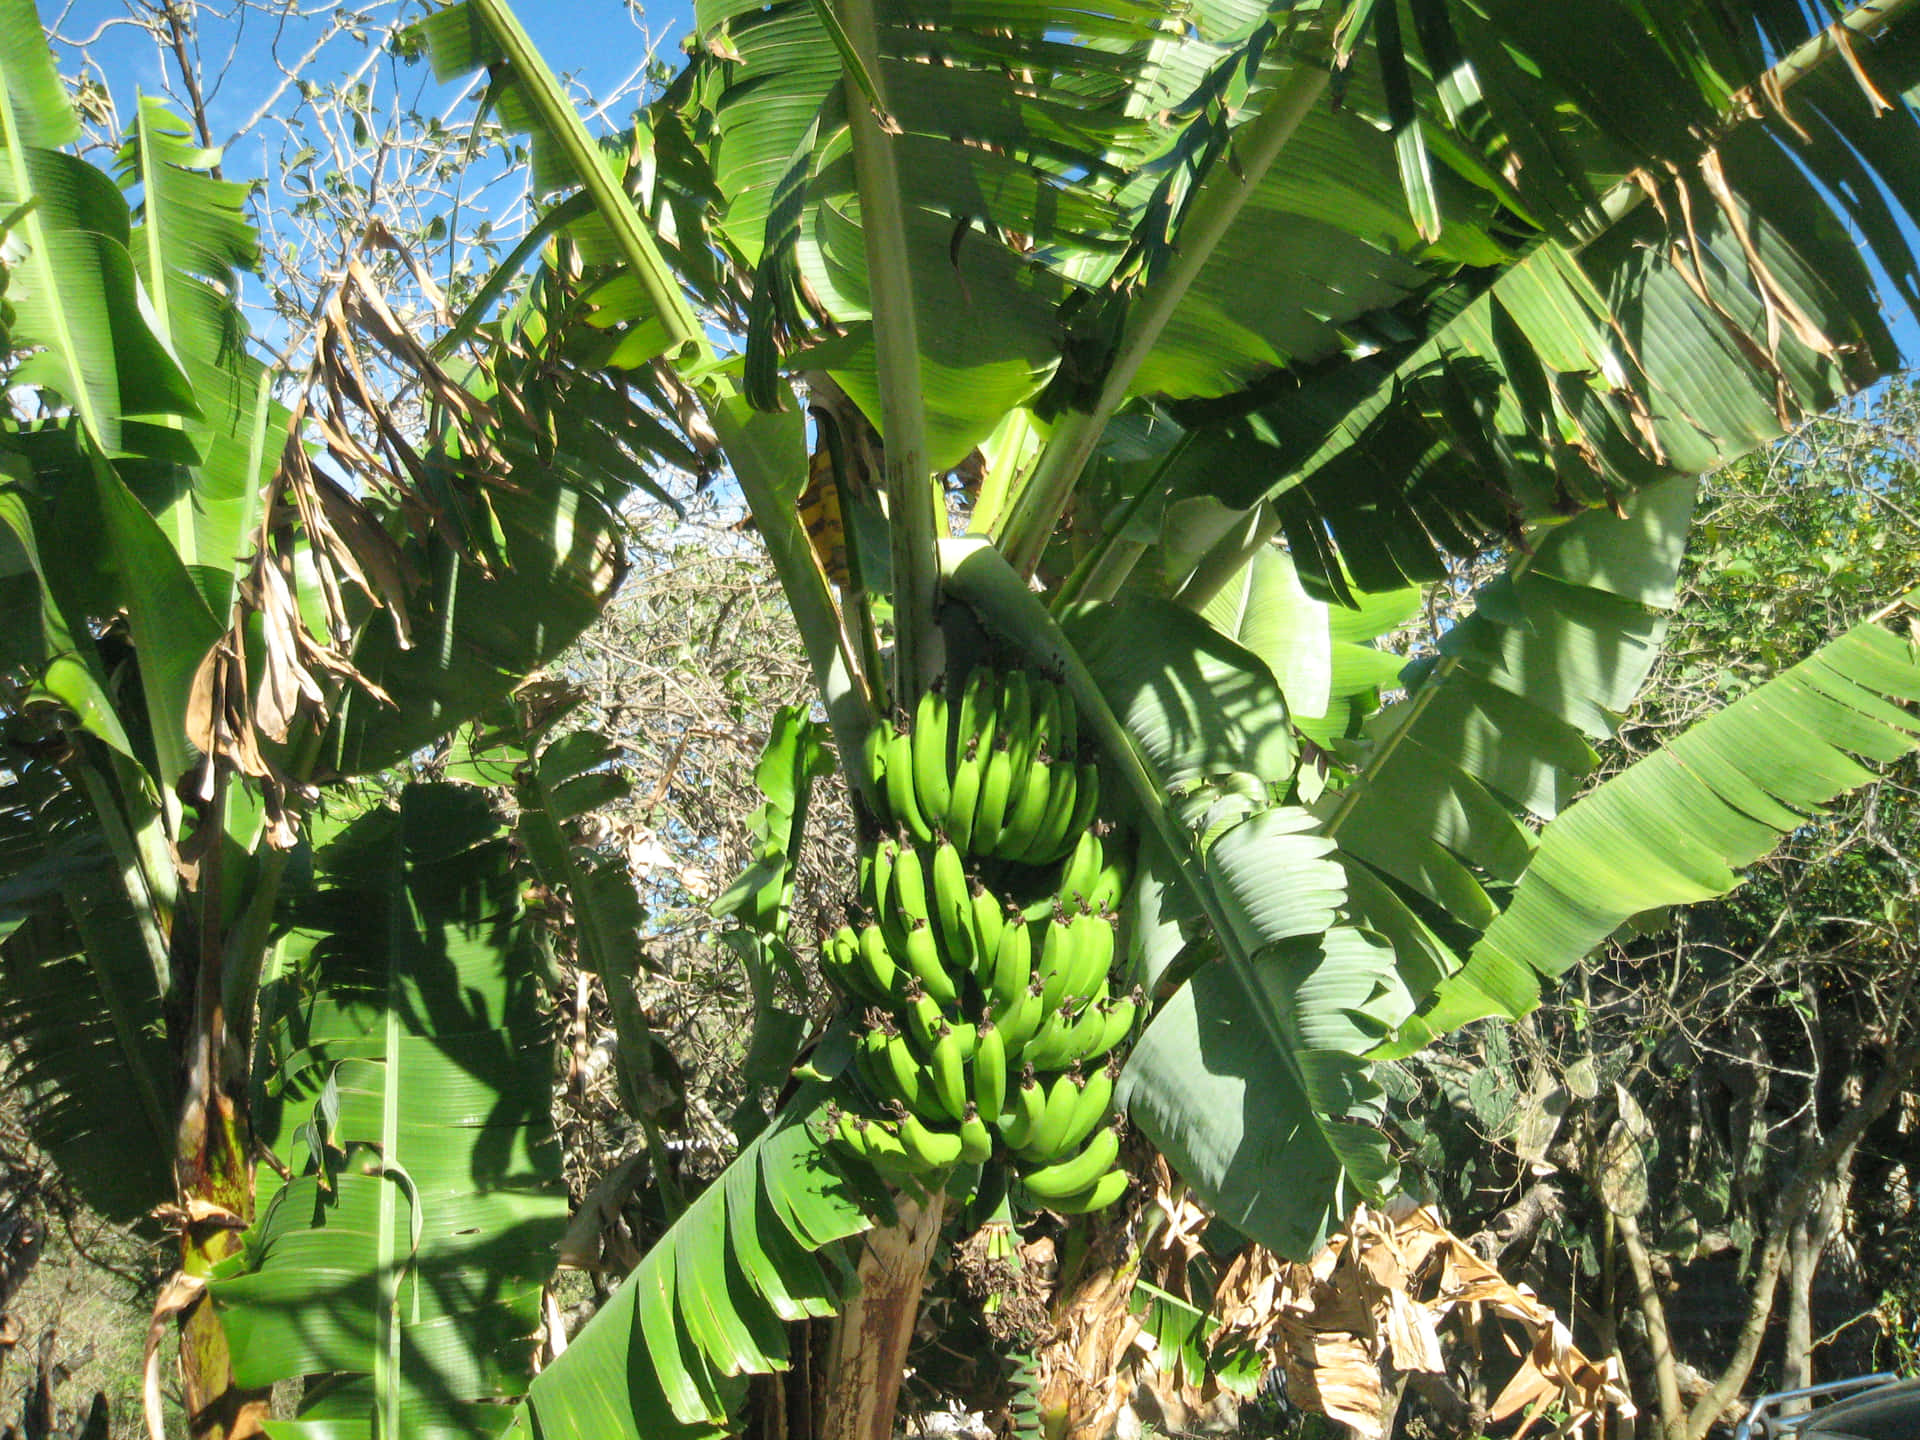 Imagende Un Árbol De Plátanos Abundante.